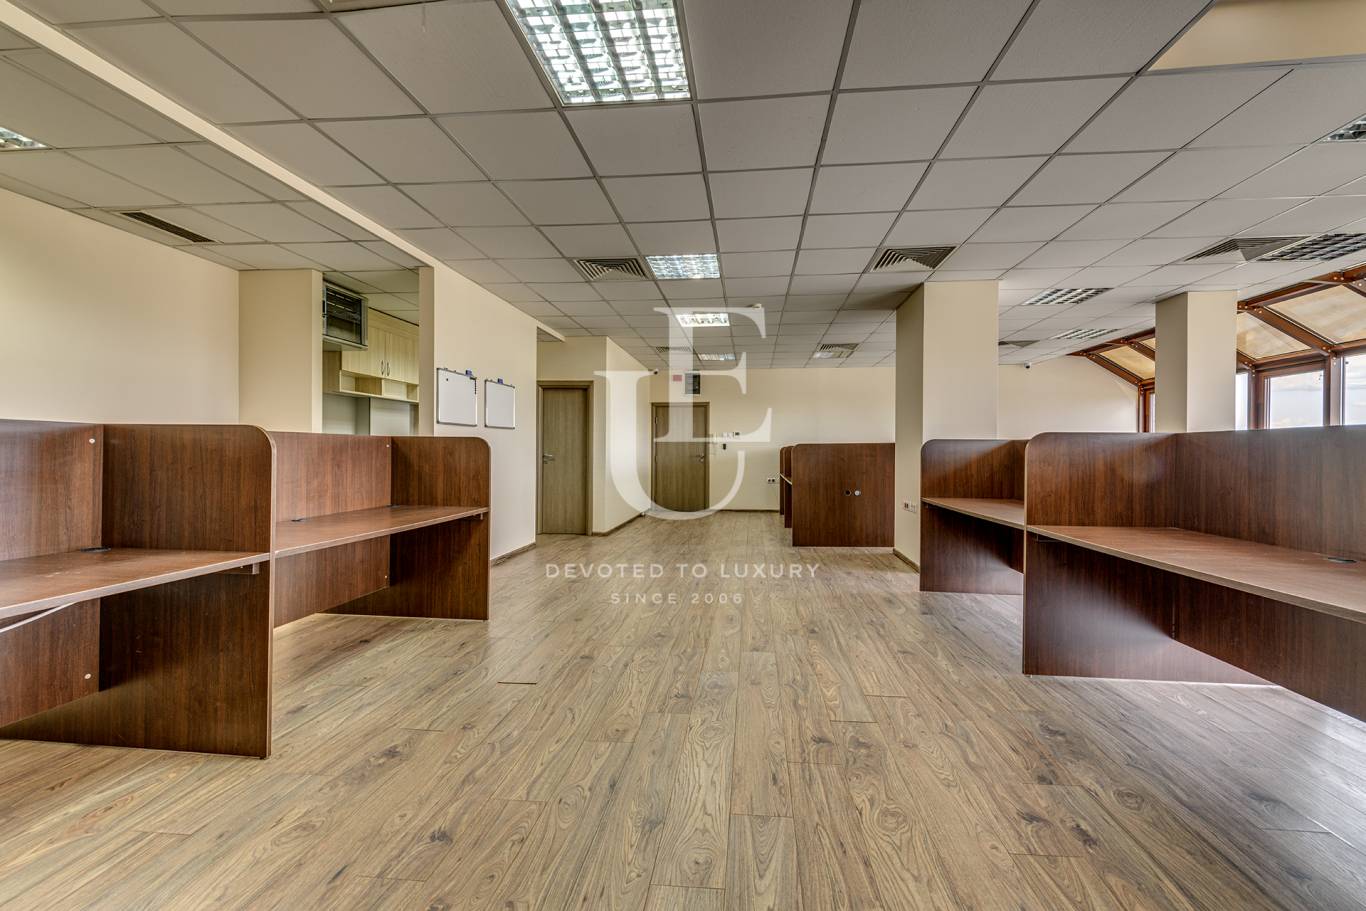 Офис под наем в София, Студентски град - код на имота: K17700 - image 7